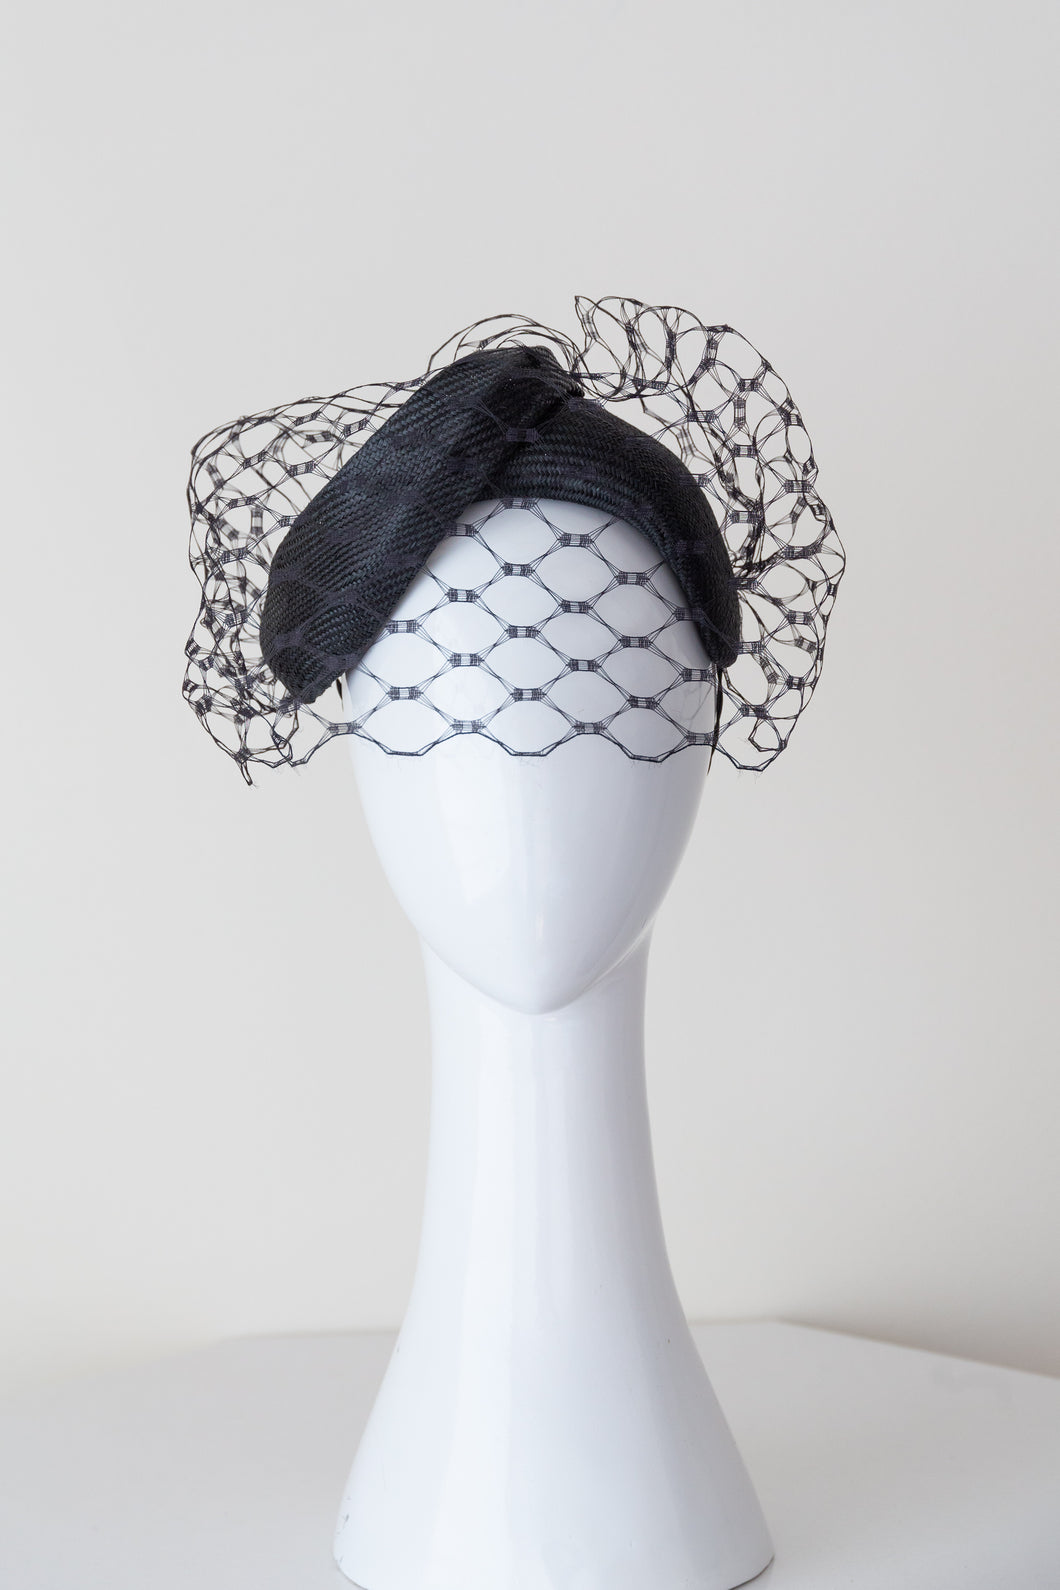 Sculptured Black Headband with Veiling